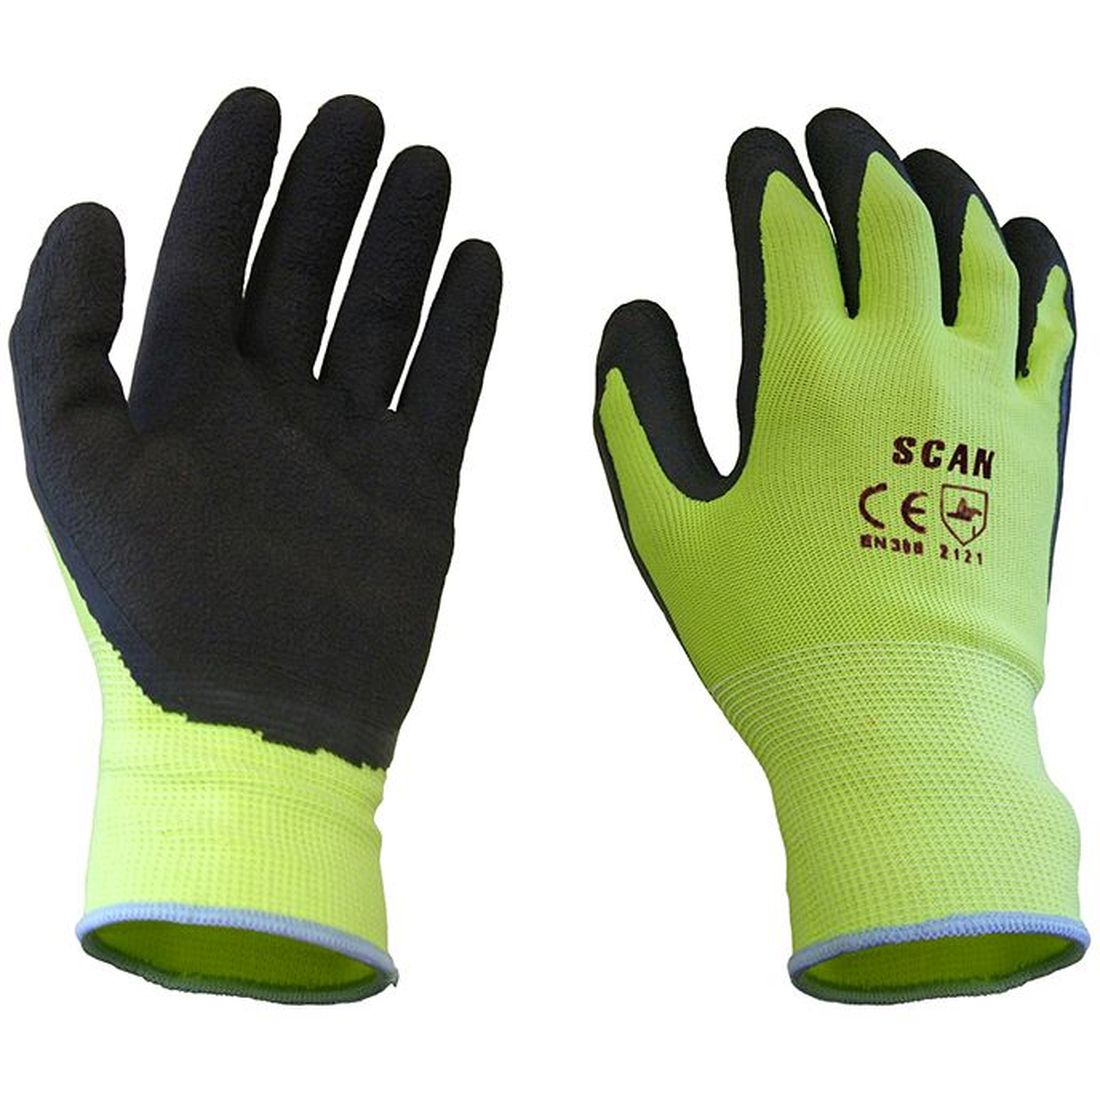 Scan Hi-Vis Yellow Foam Latex Coated Gloves -XL (Size 10)                            